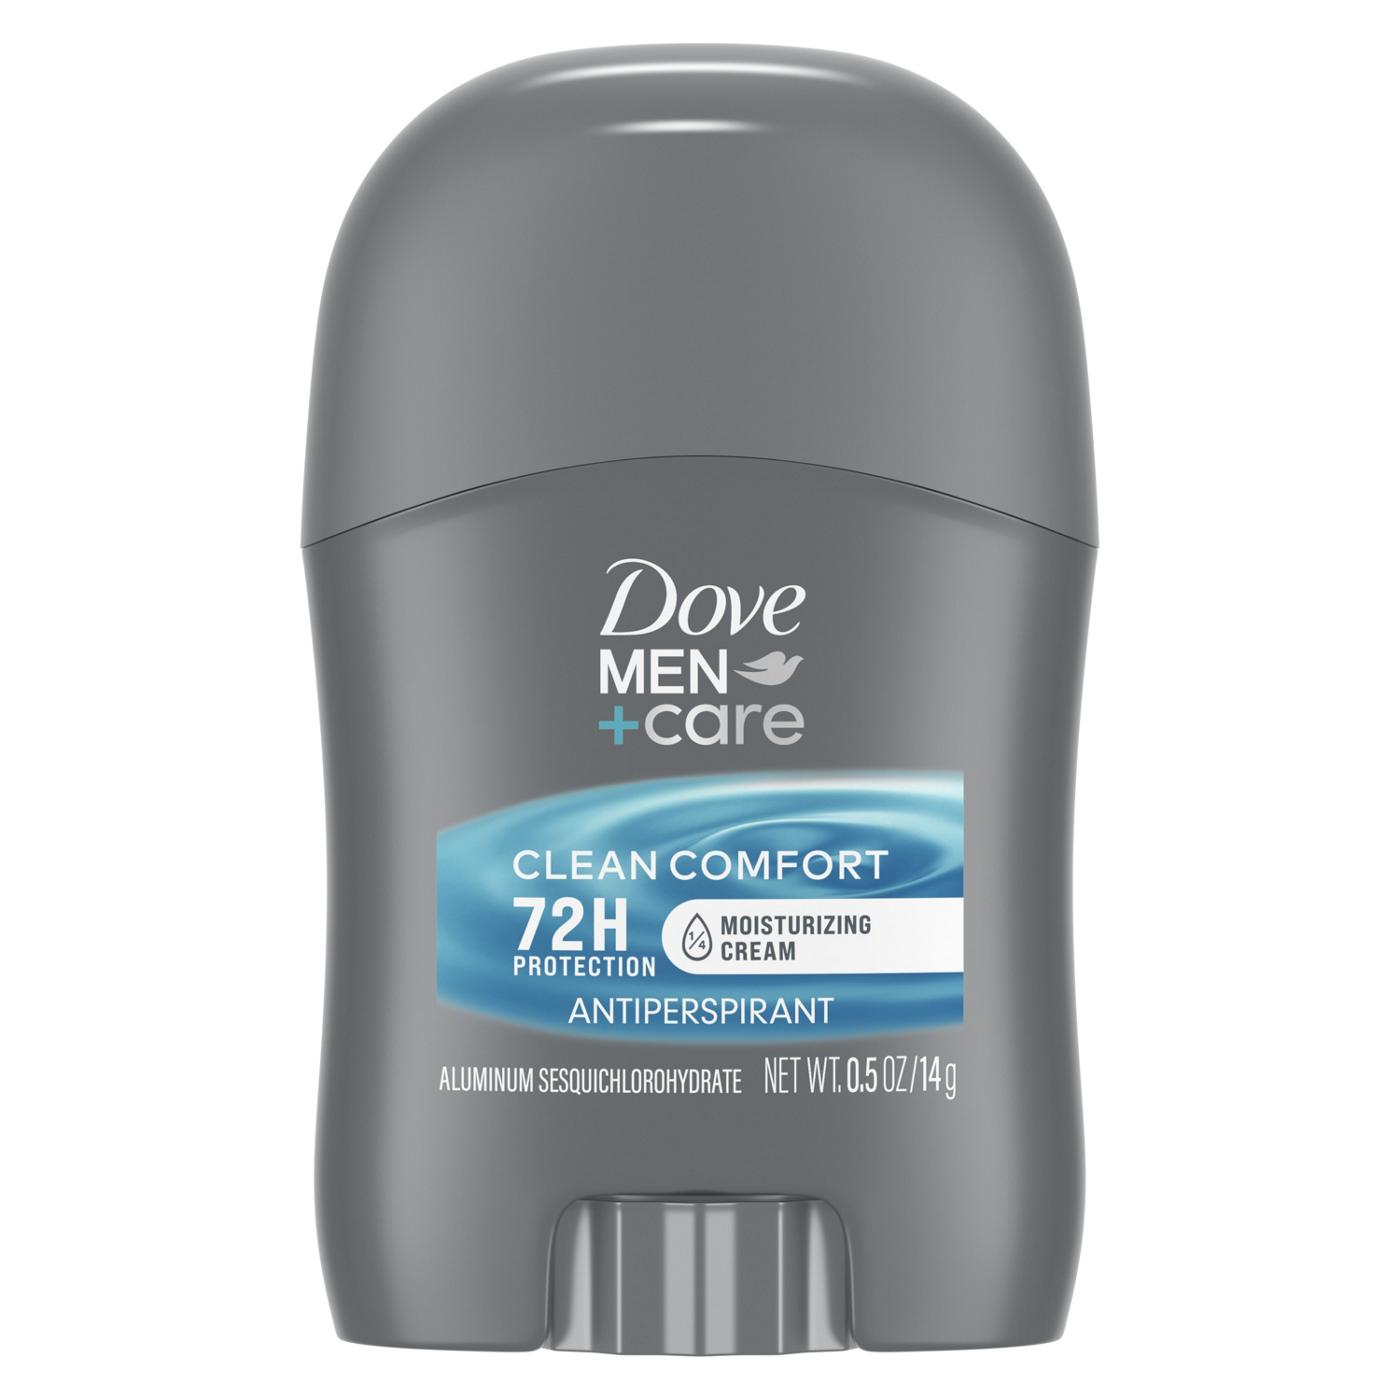 Dove Men+Care  Antiperspirant  -Clean Comfort; image 1 of 3